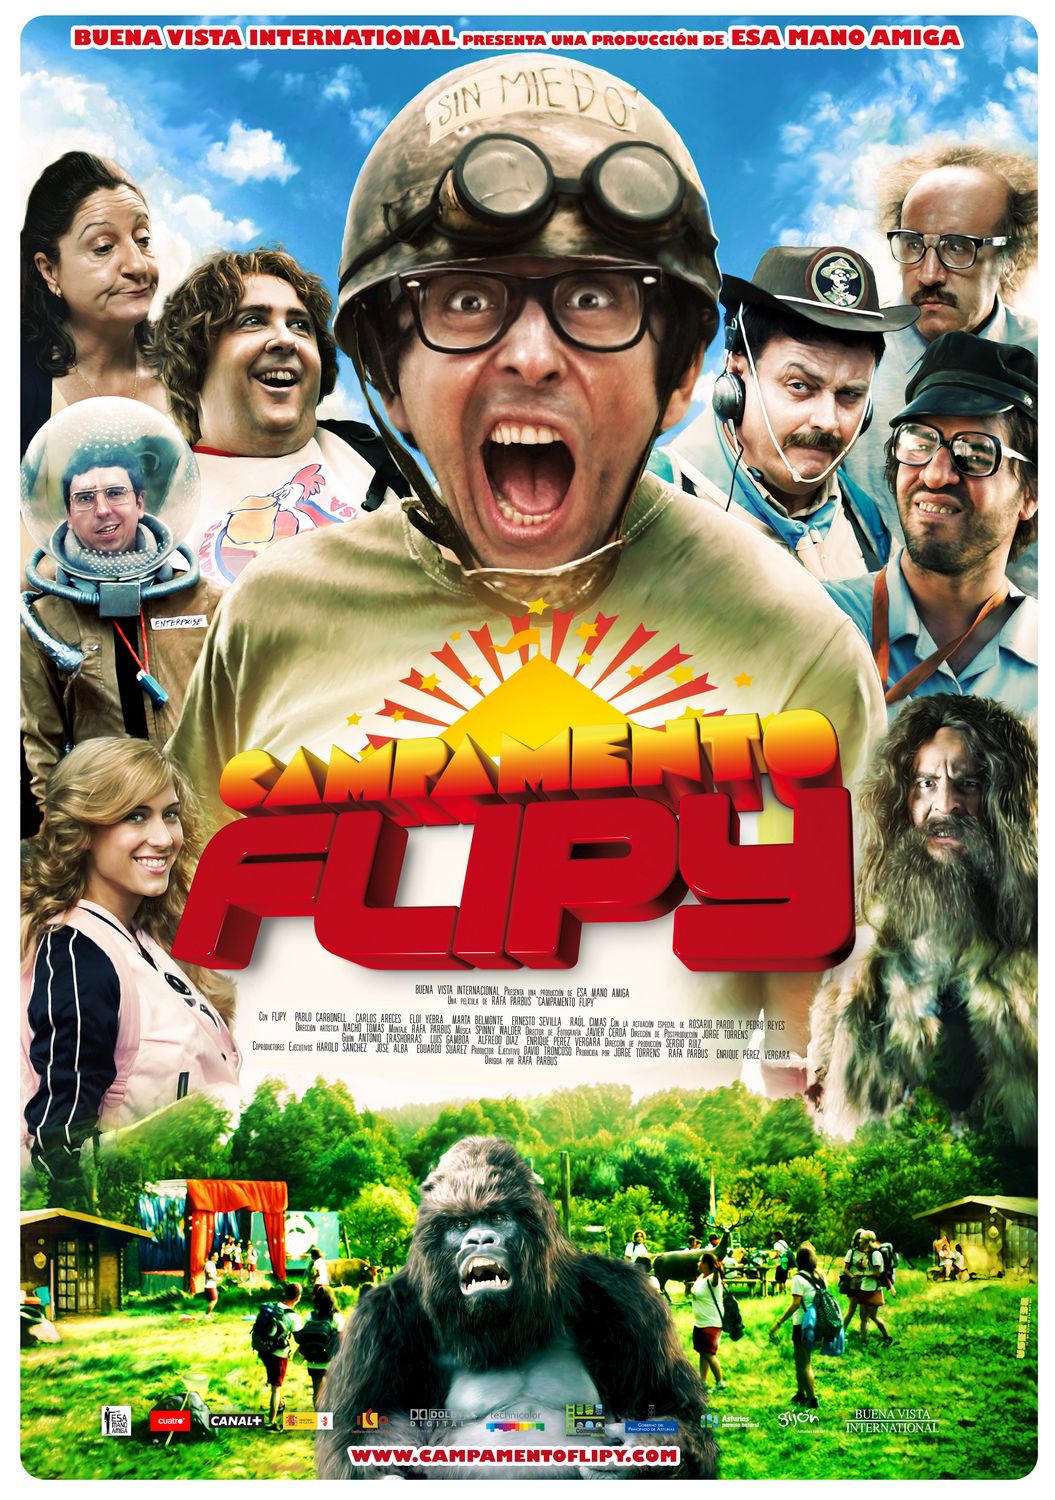 Campamento Flipy movie